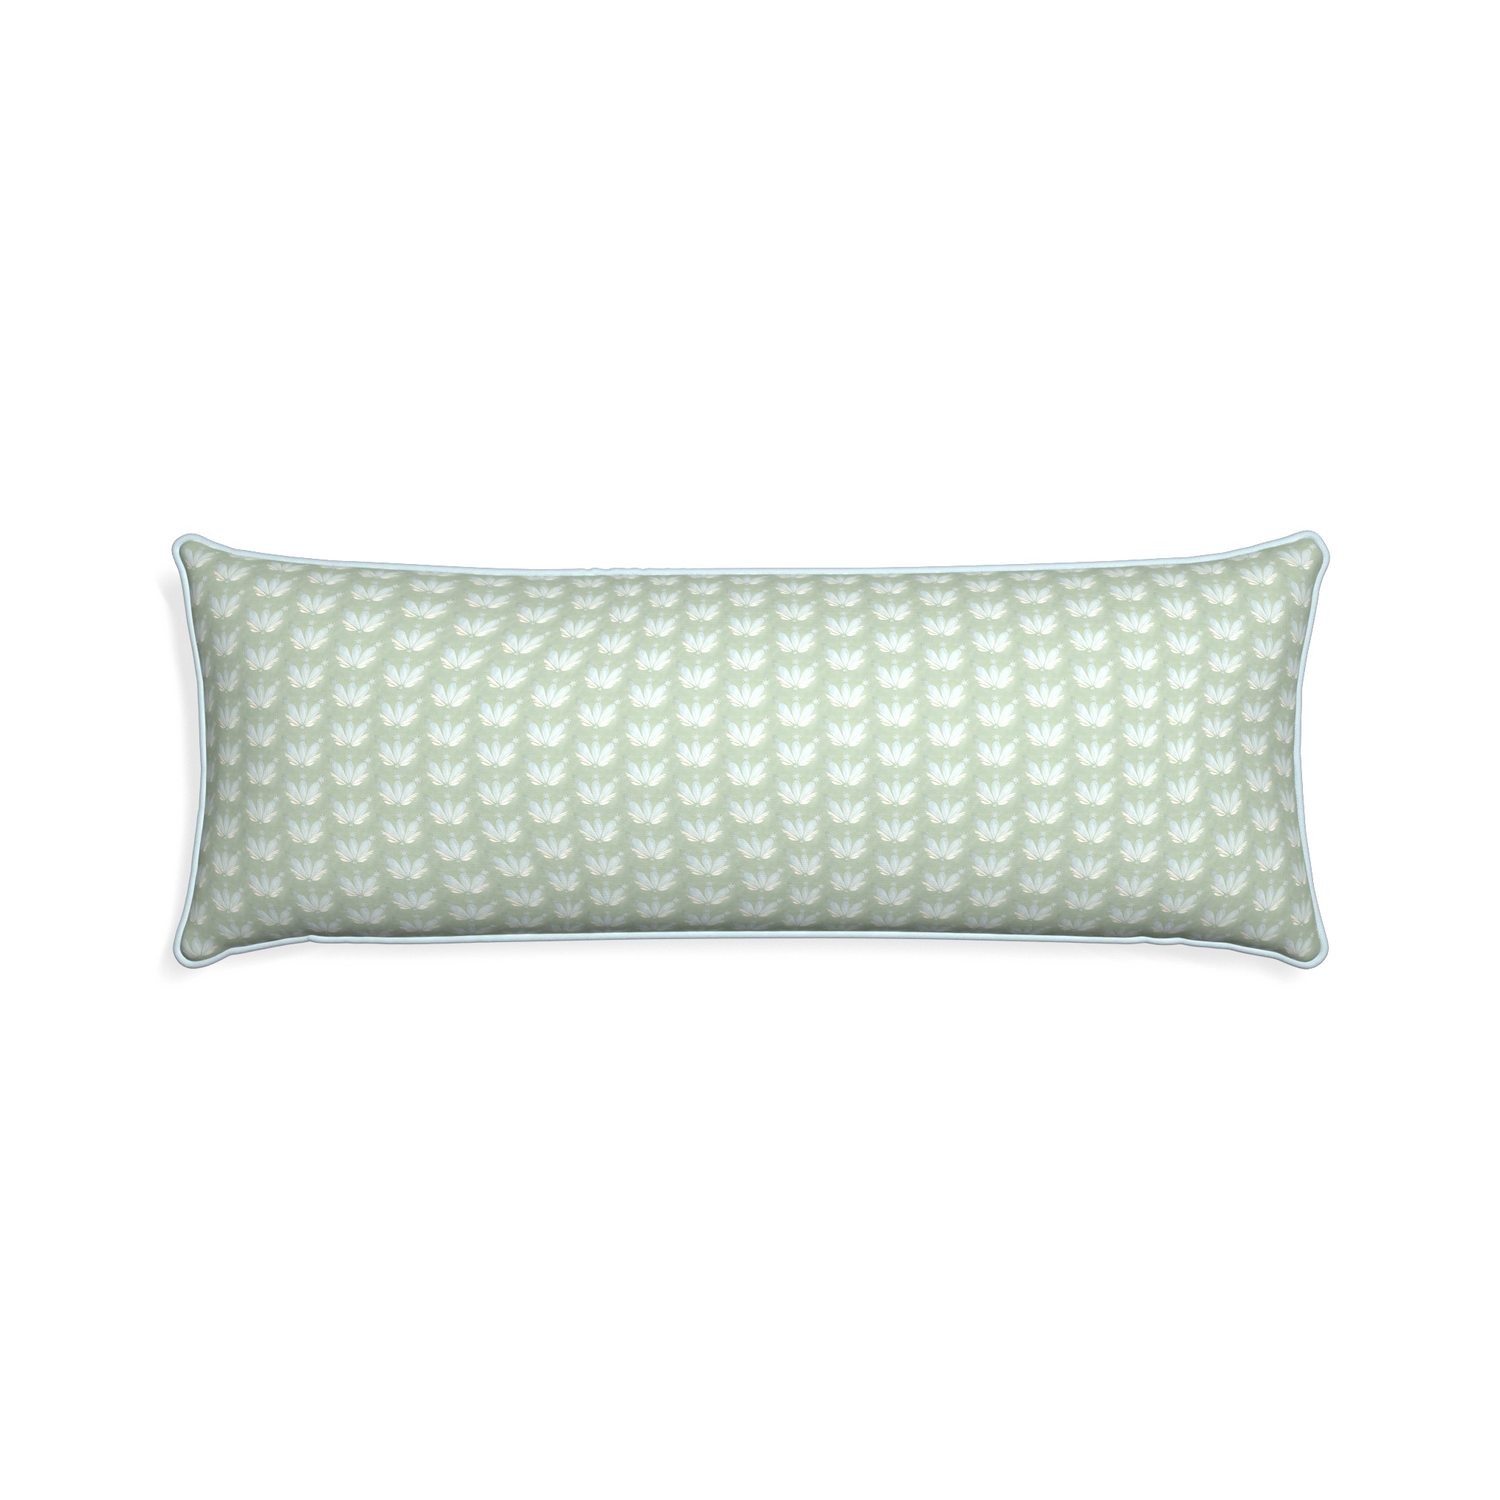 Xl-lumbar serena sea salt custom pillow with powder piping on white background